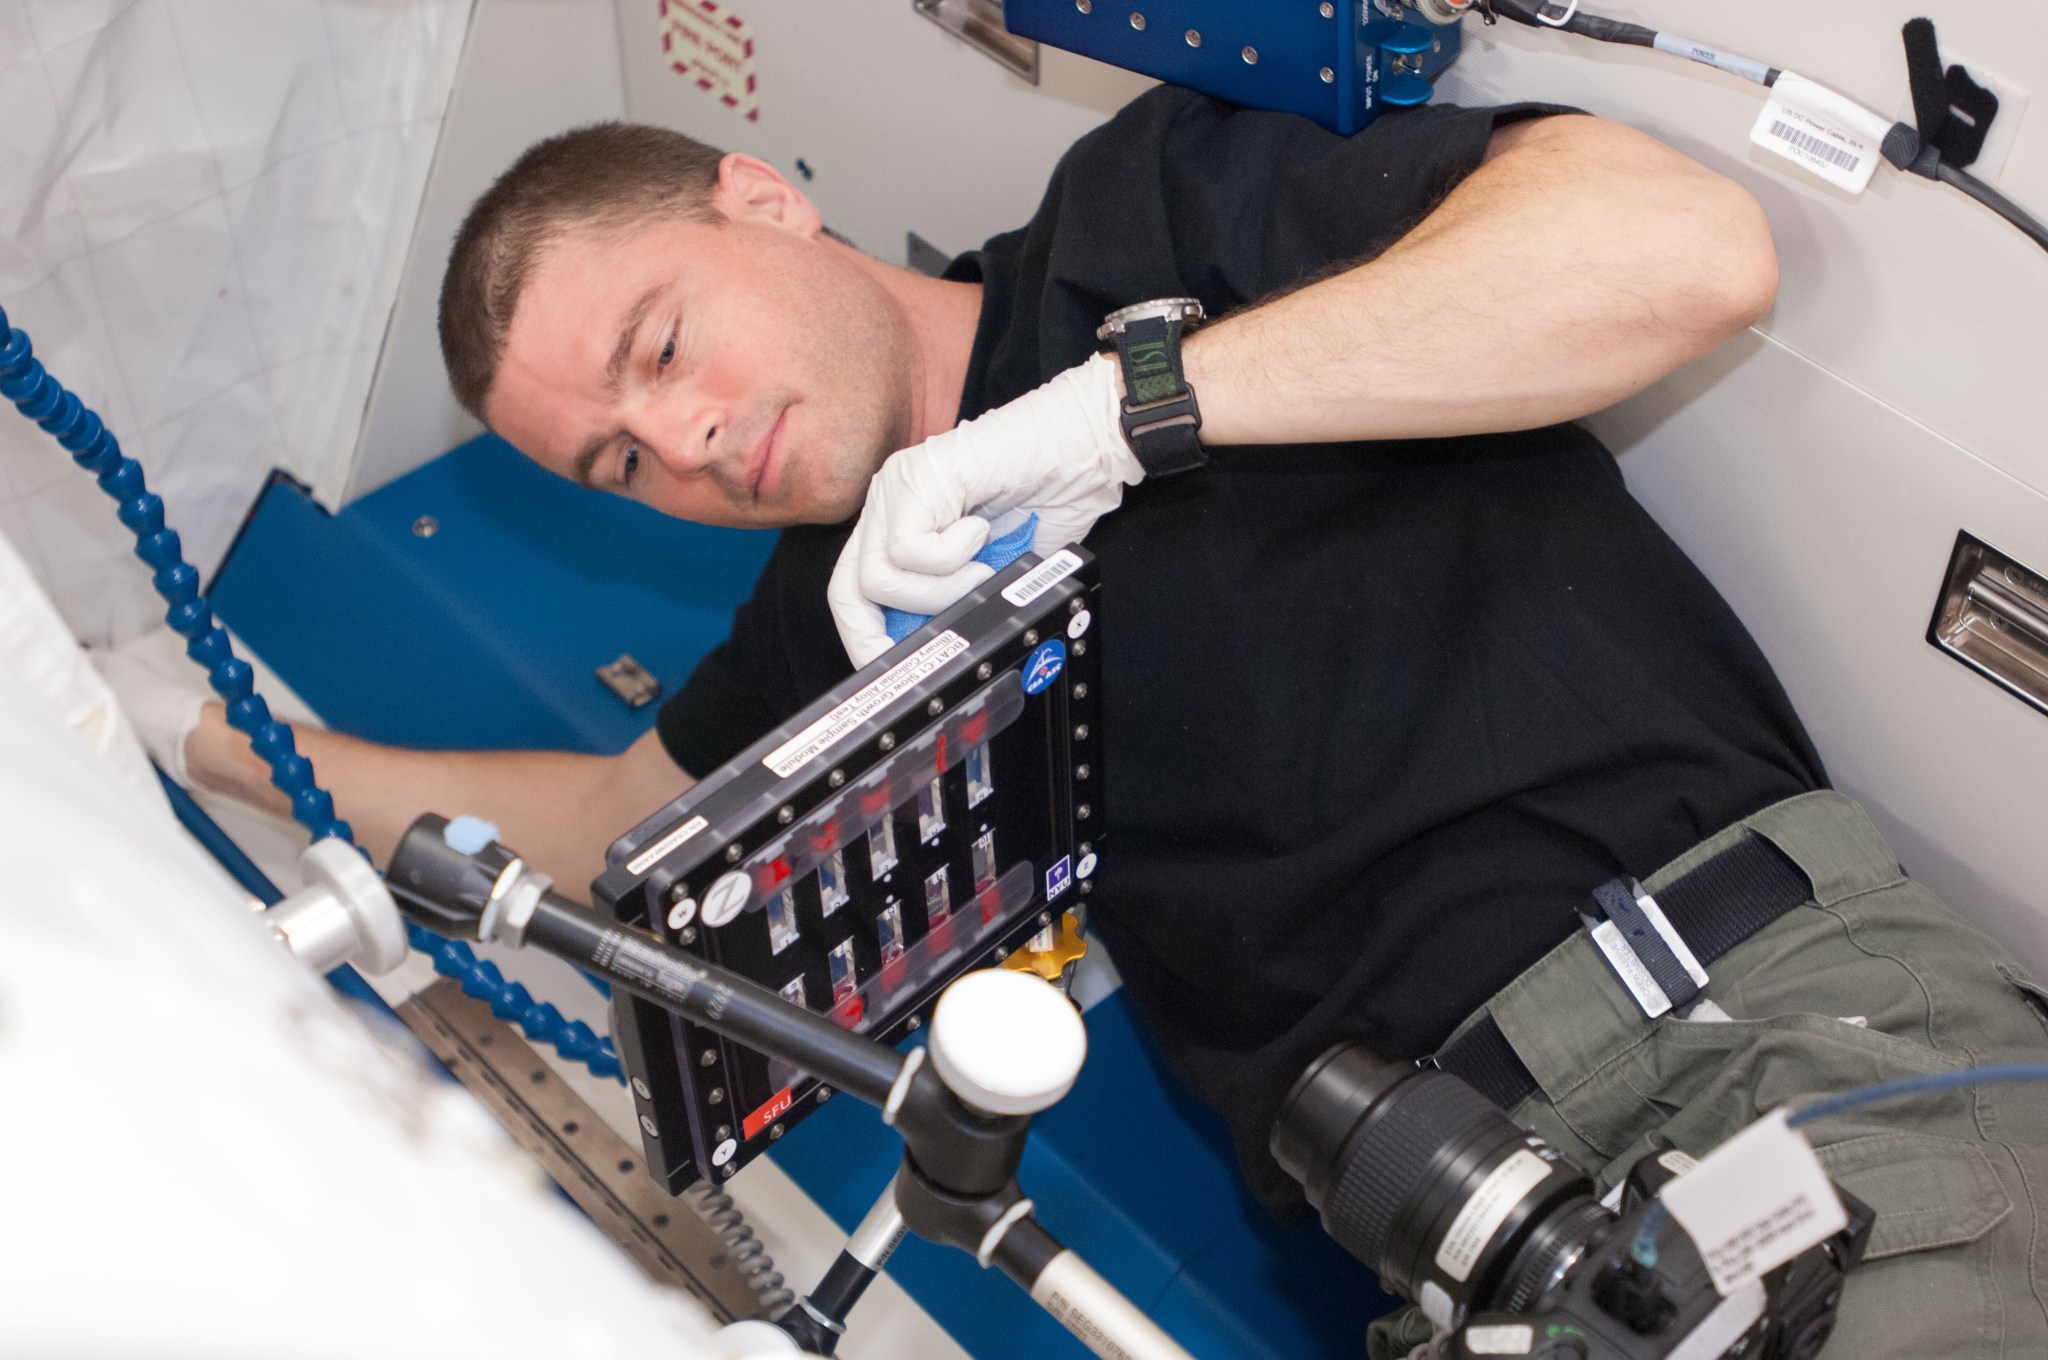 NASA astronaut Reid Wiseman